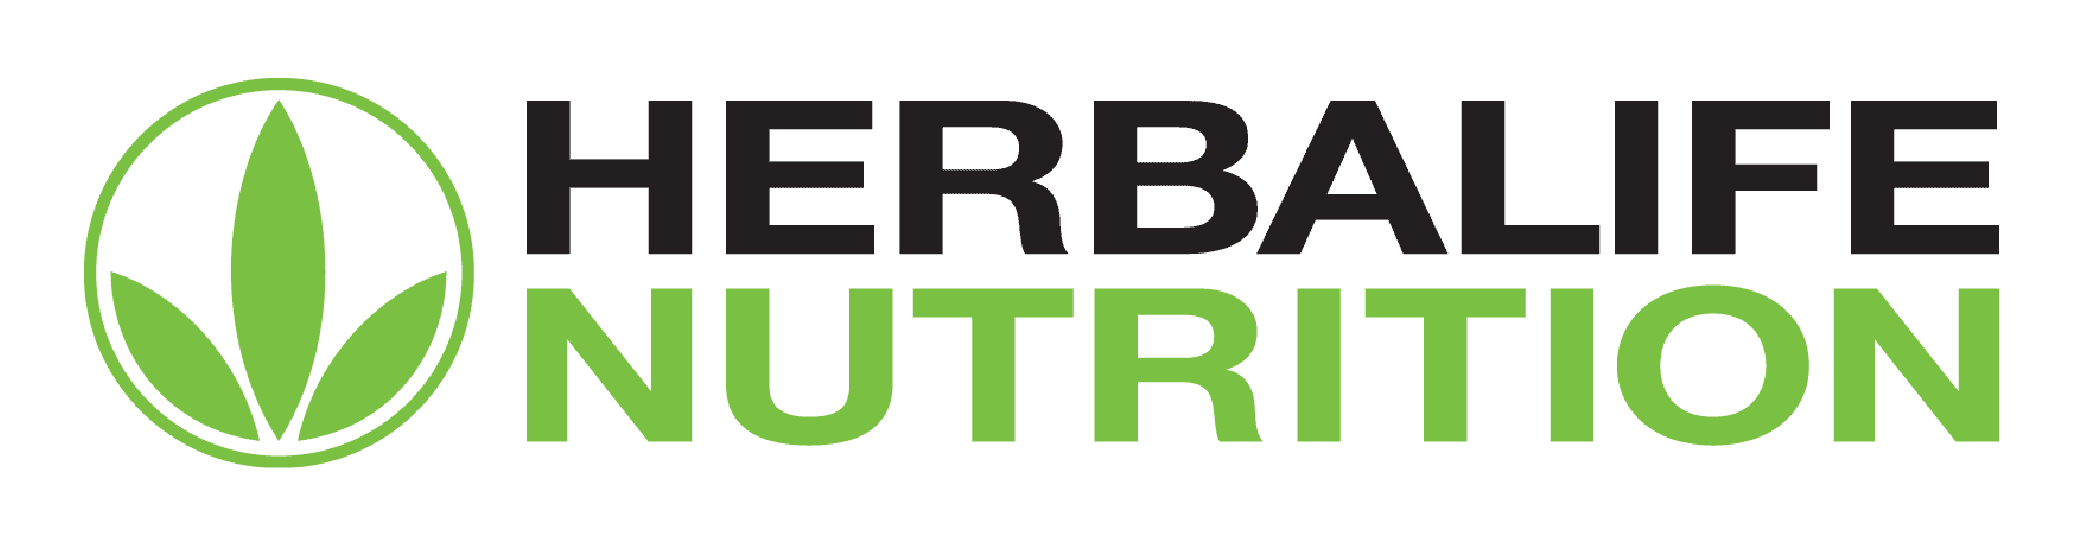 herbalife-nutrition-logo